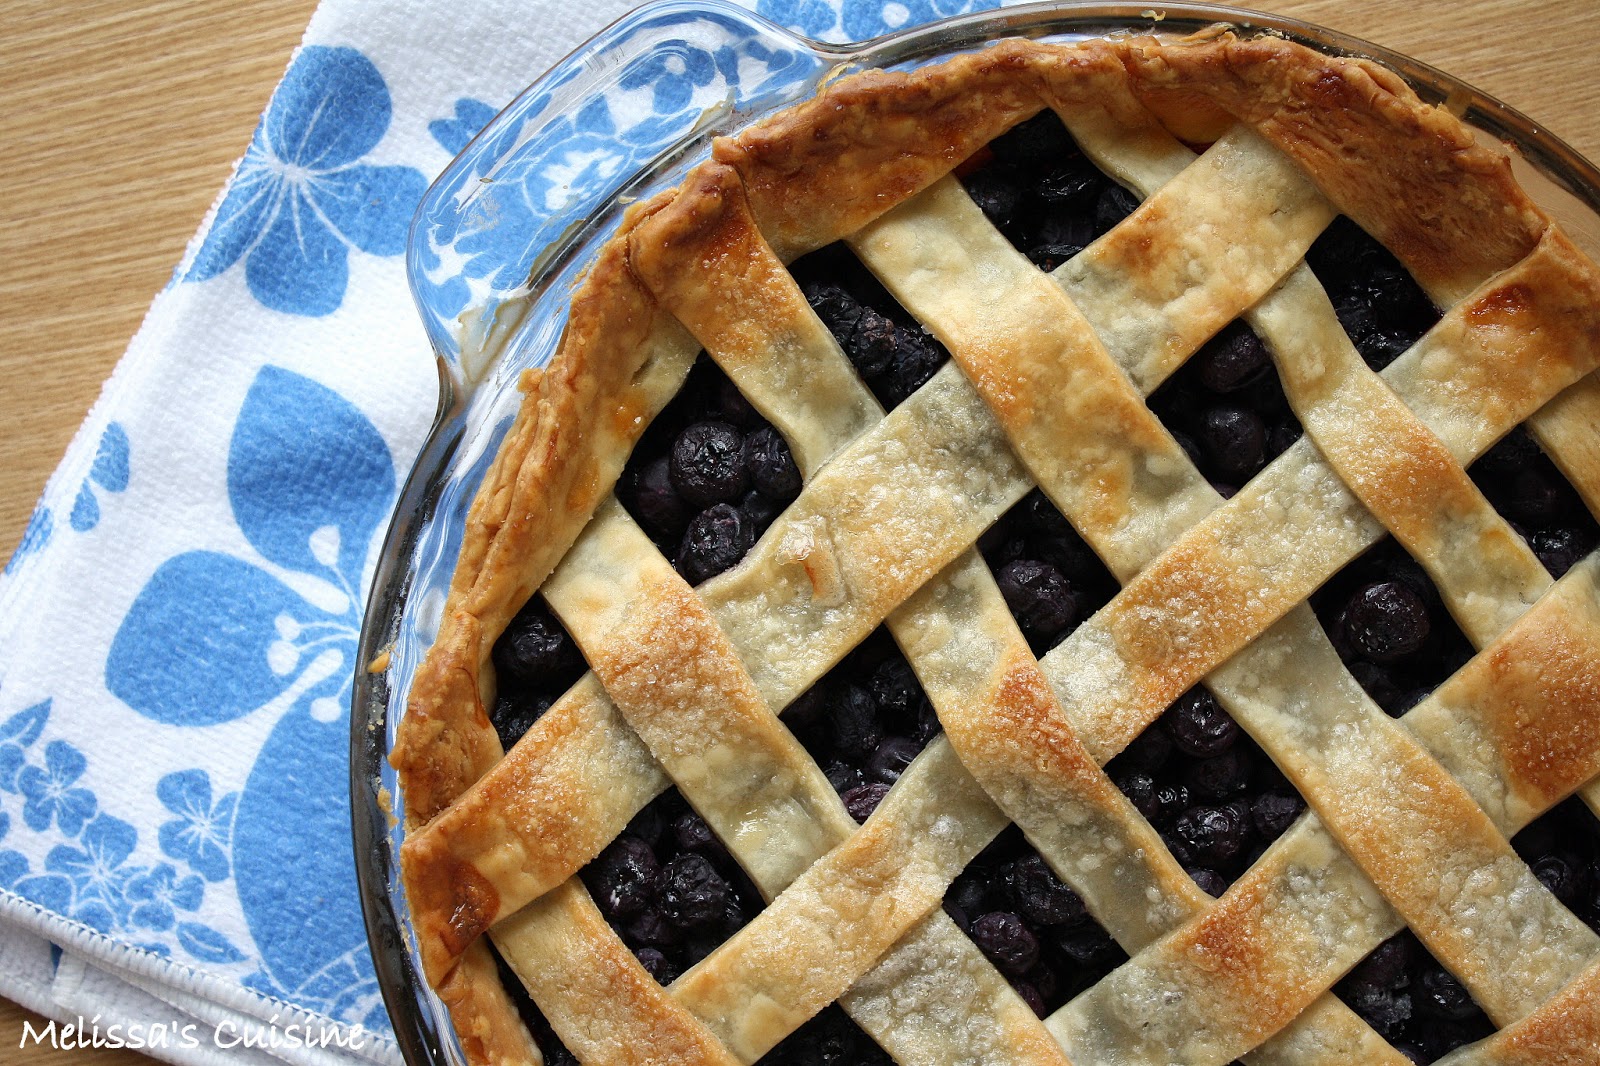 Melissa's Cuisine: Blueberry Pie